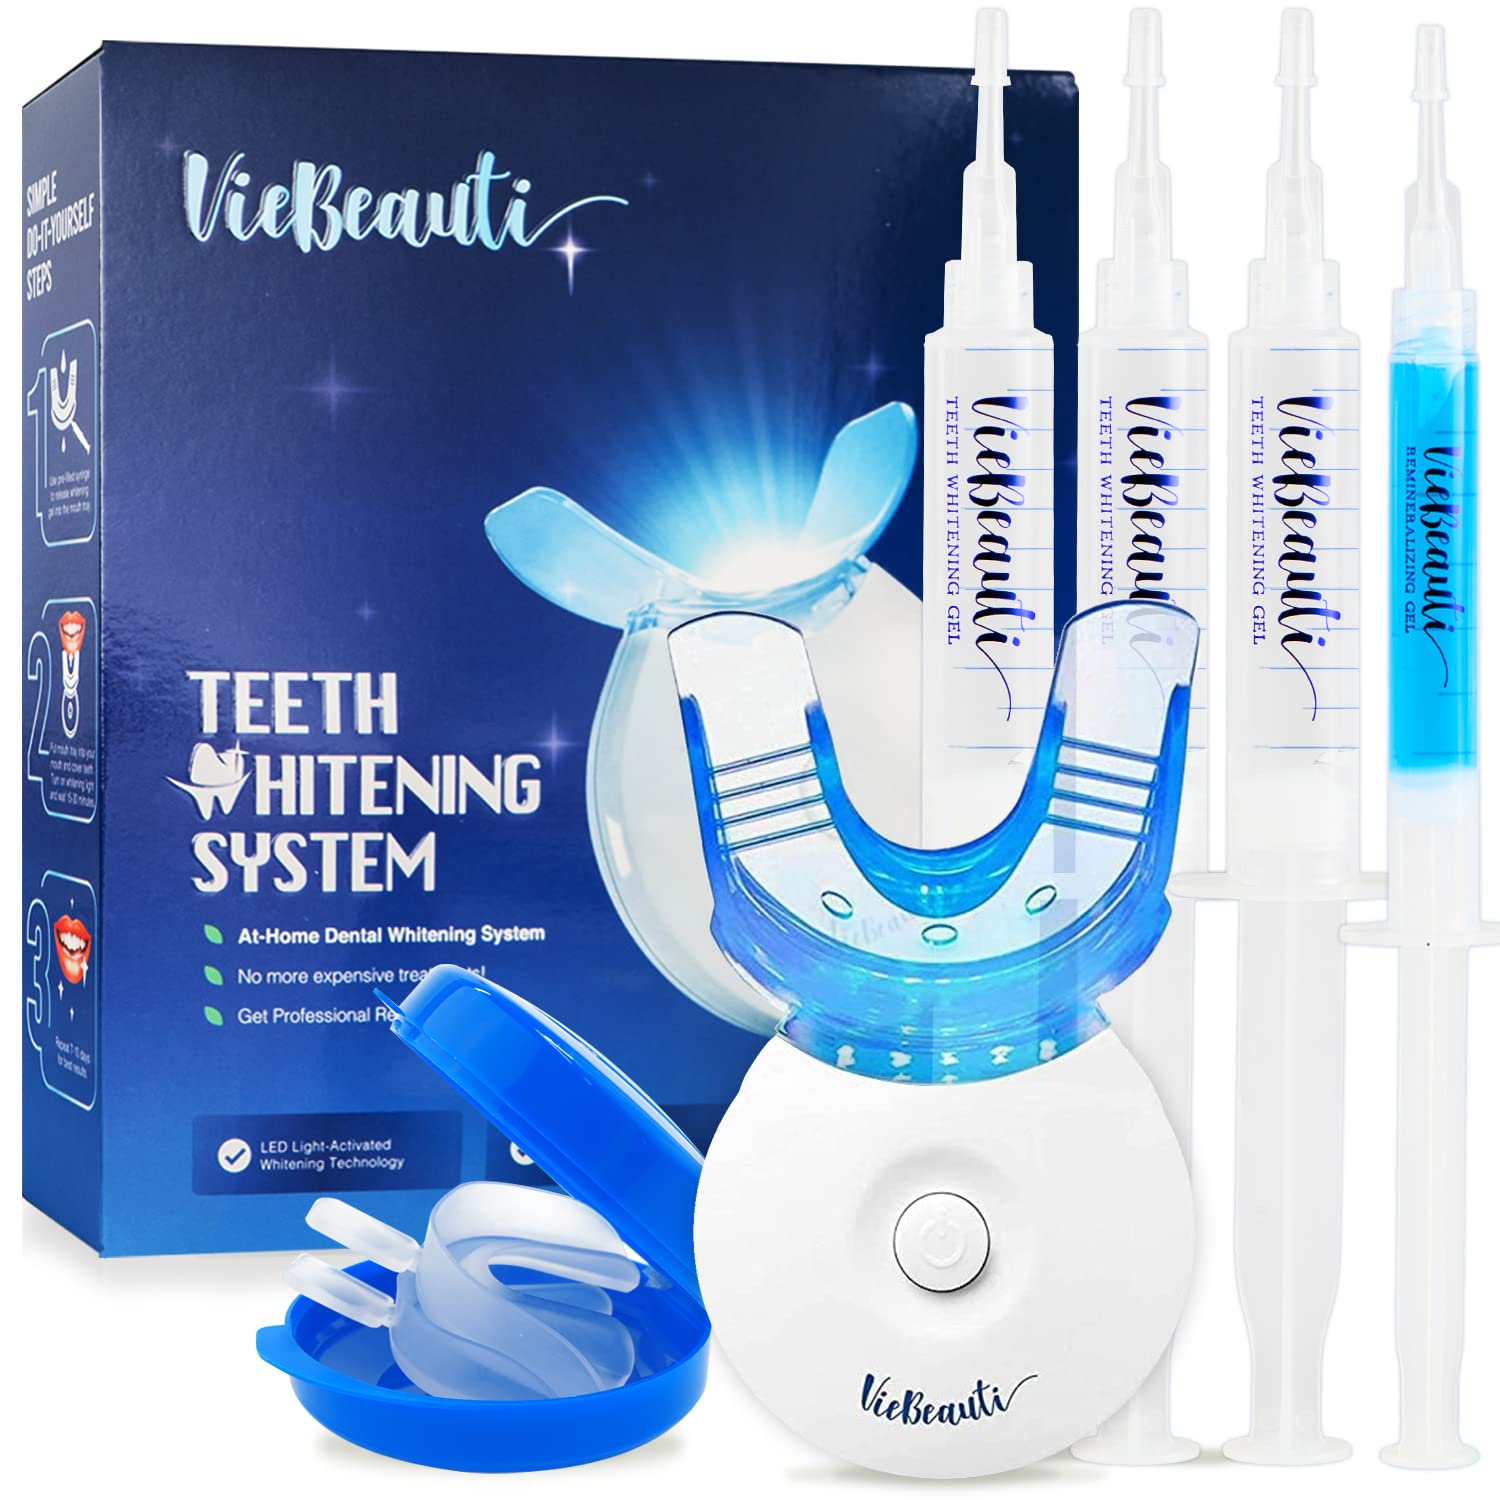 Match imperium Institut VieBeauti At-Home Dental LED Light Teeth Whitener